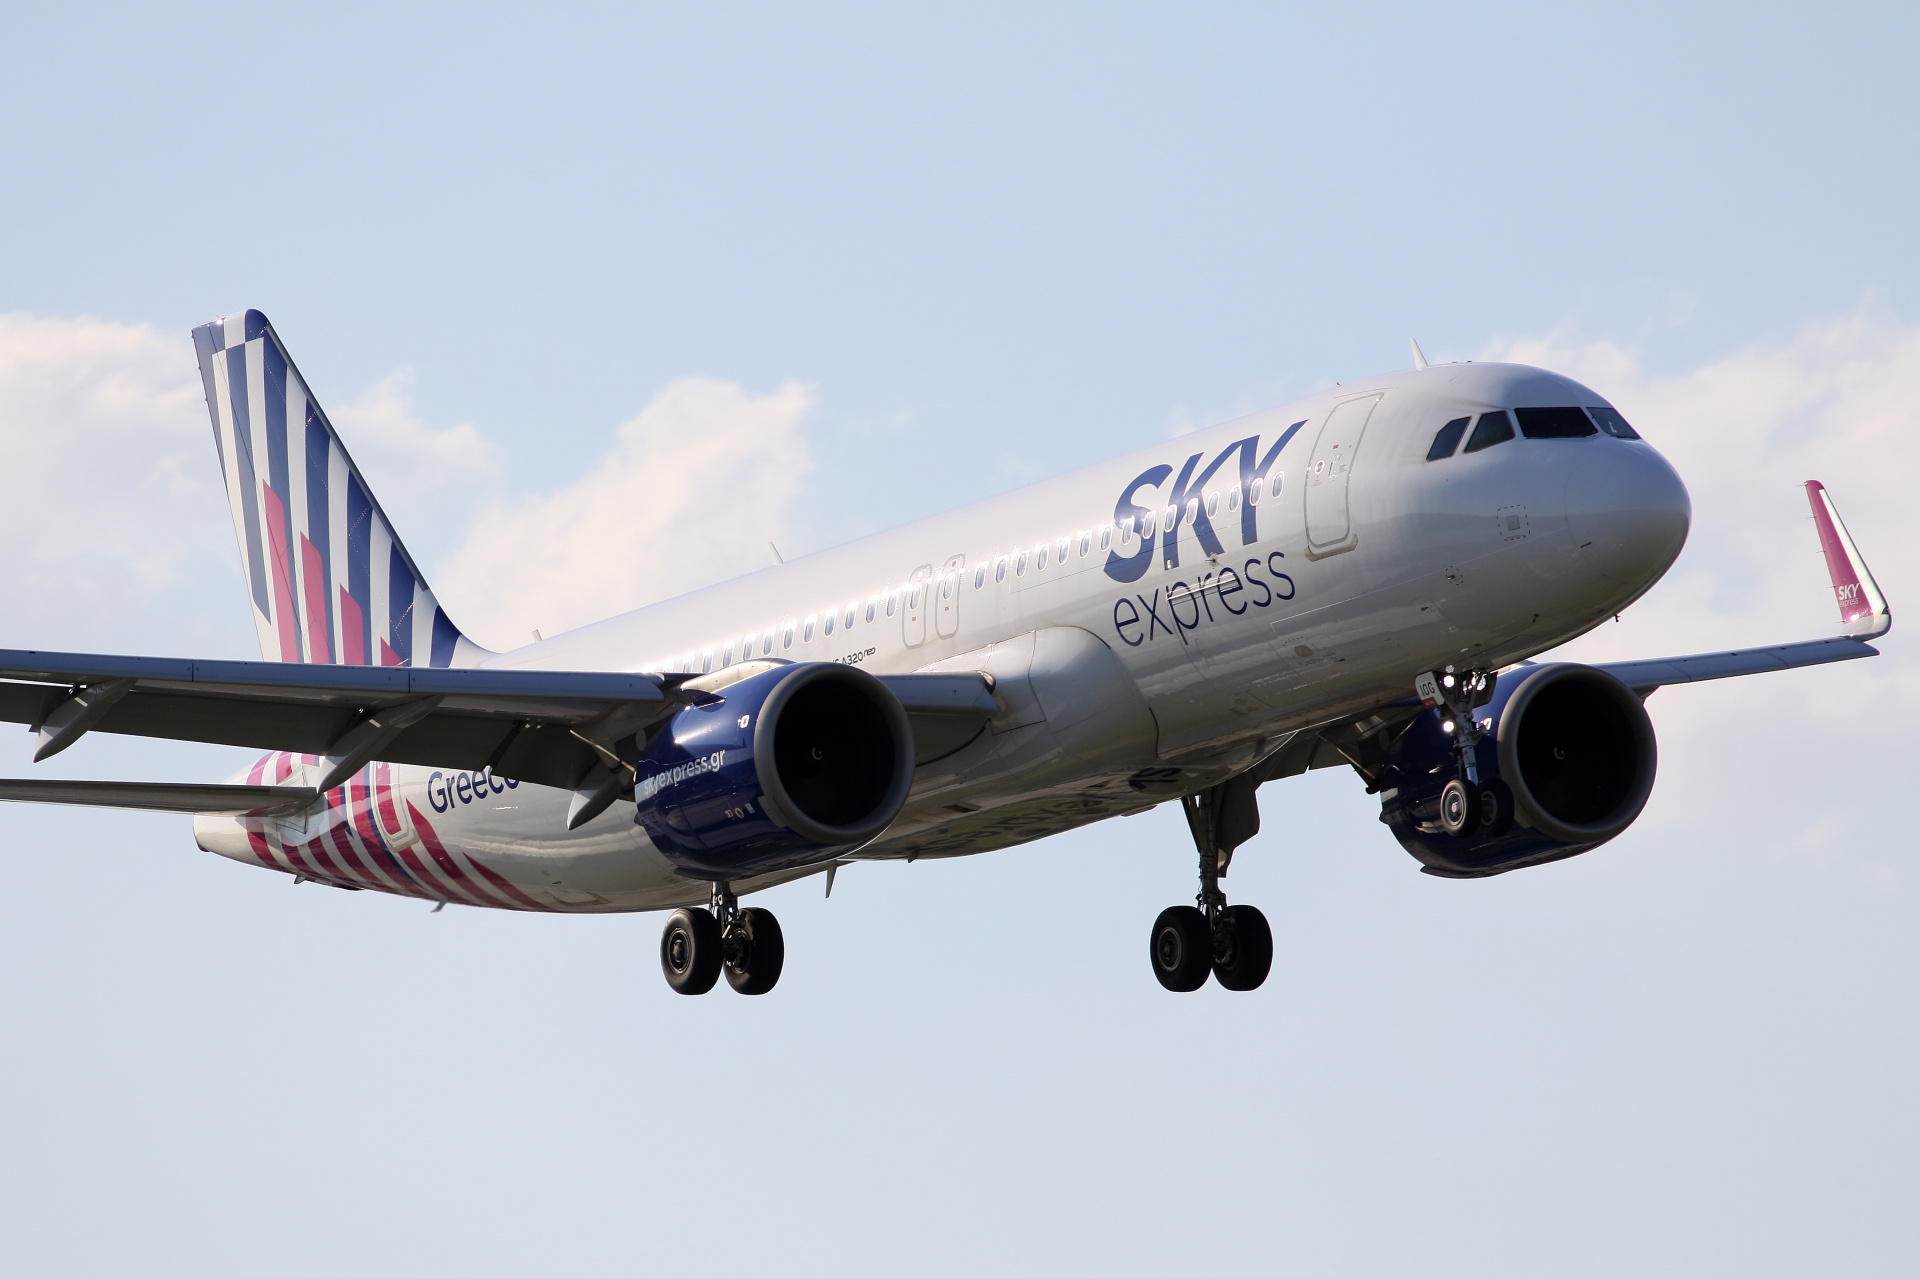 SX-IOG (Aircraft » EPWA Spotting » Airbus A320neo » SKY Express)